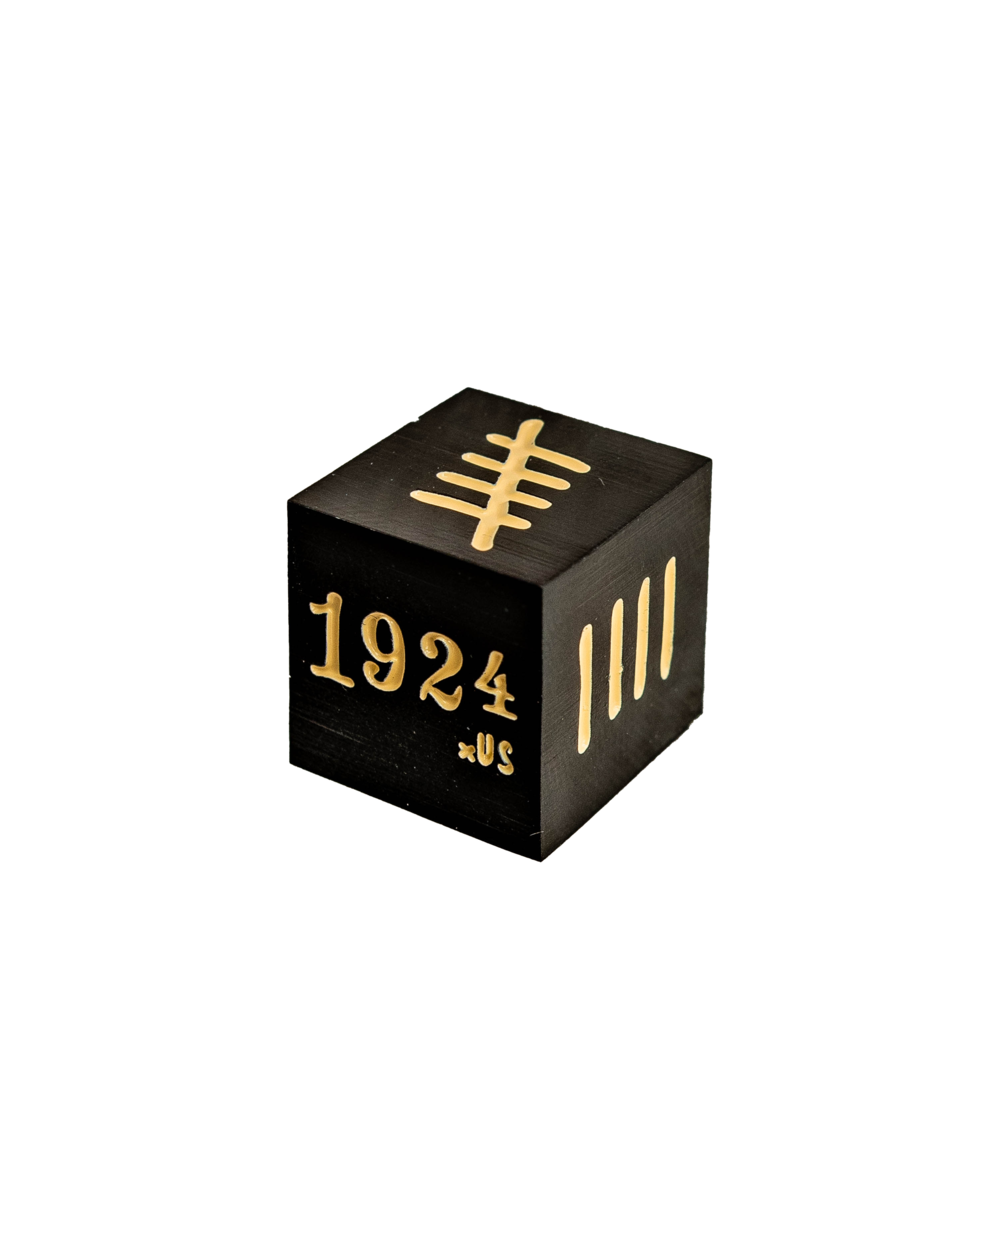 1924us 实心钢骰子 - 黑色